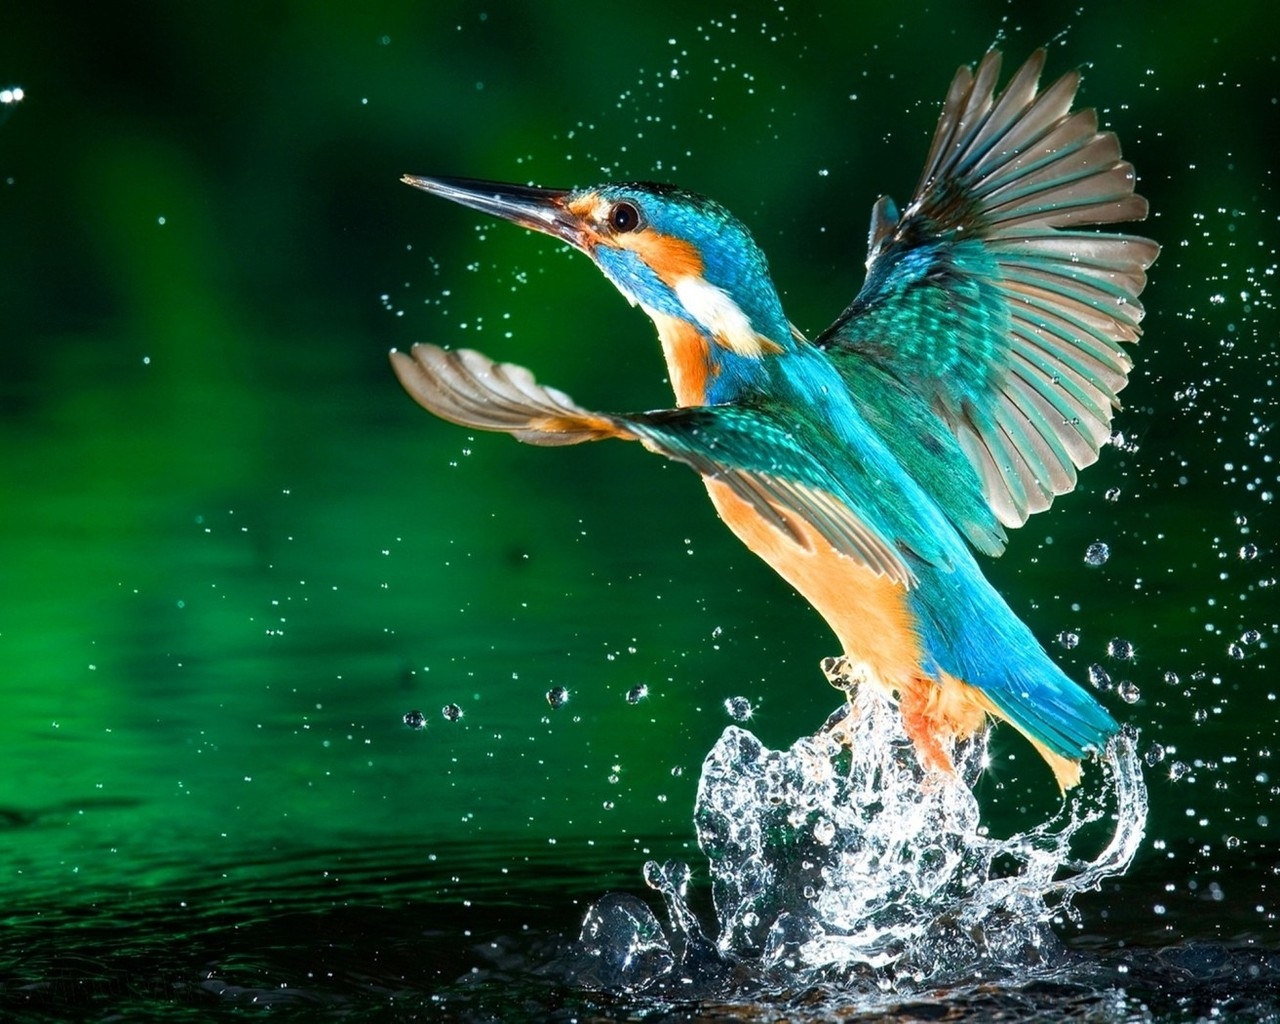 Kingfisher Bird for 1280 x 1024 resolution